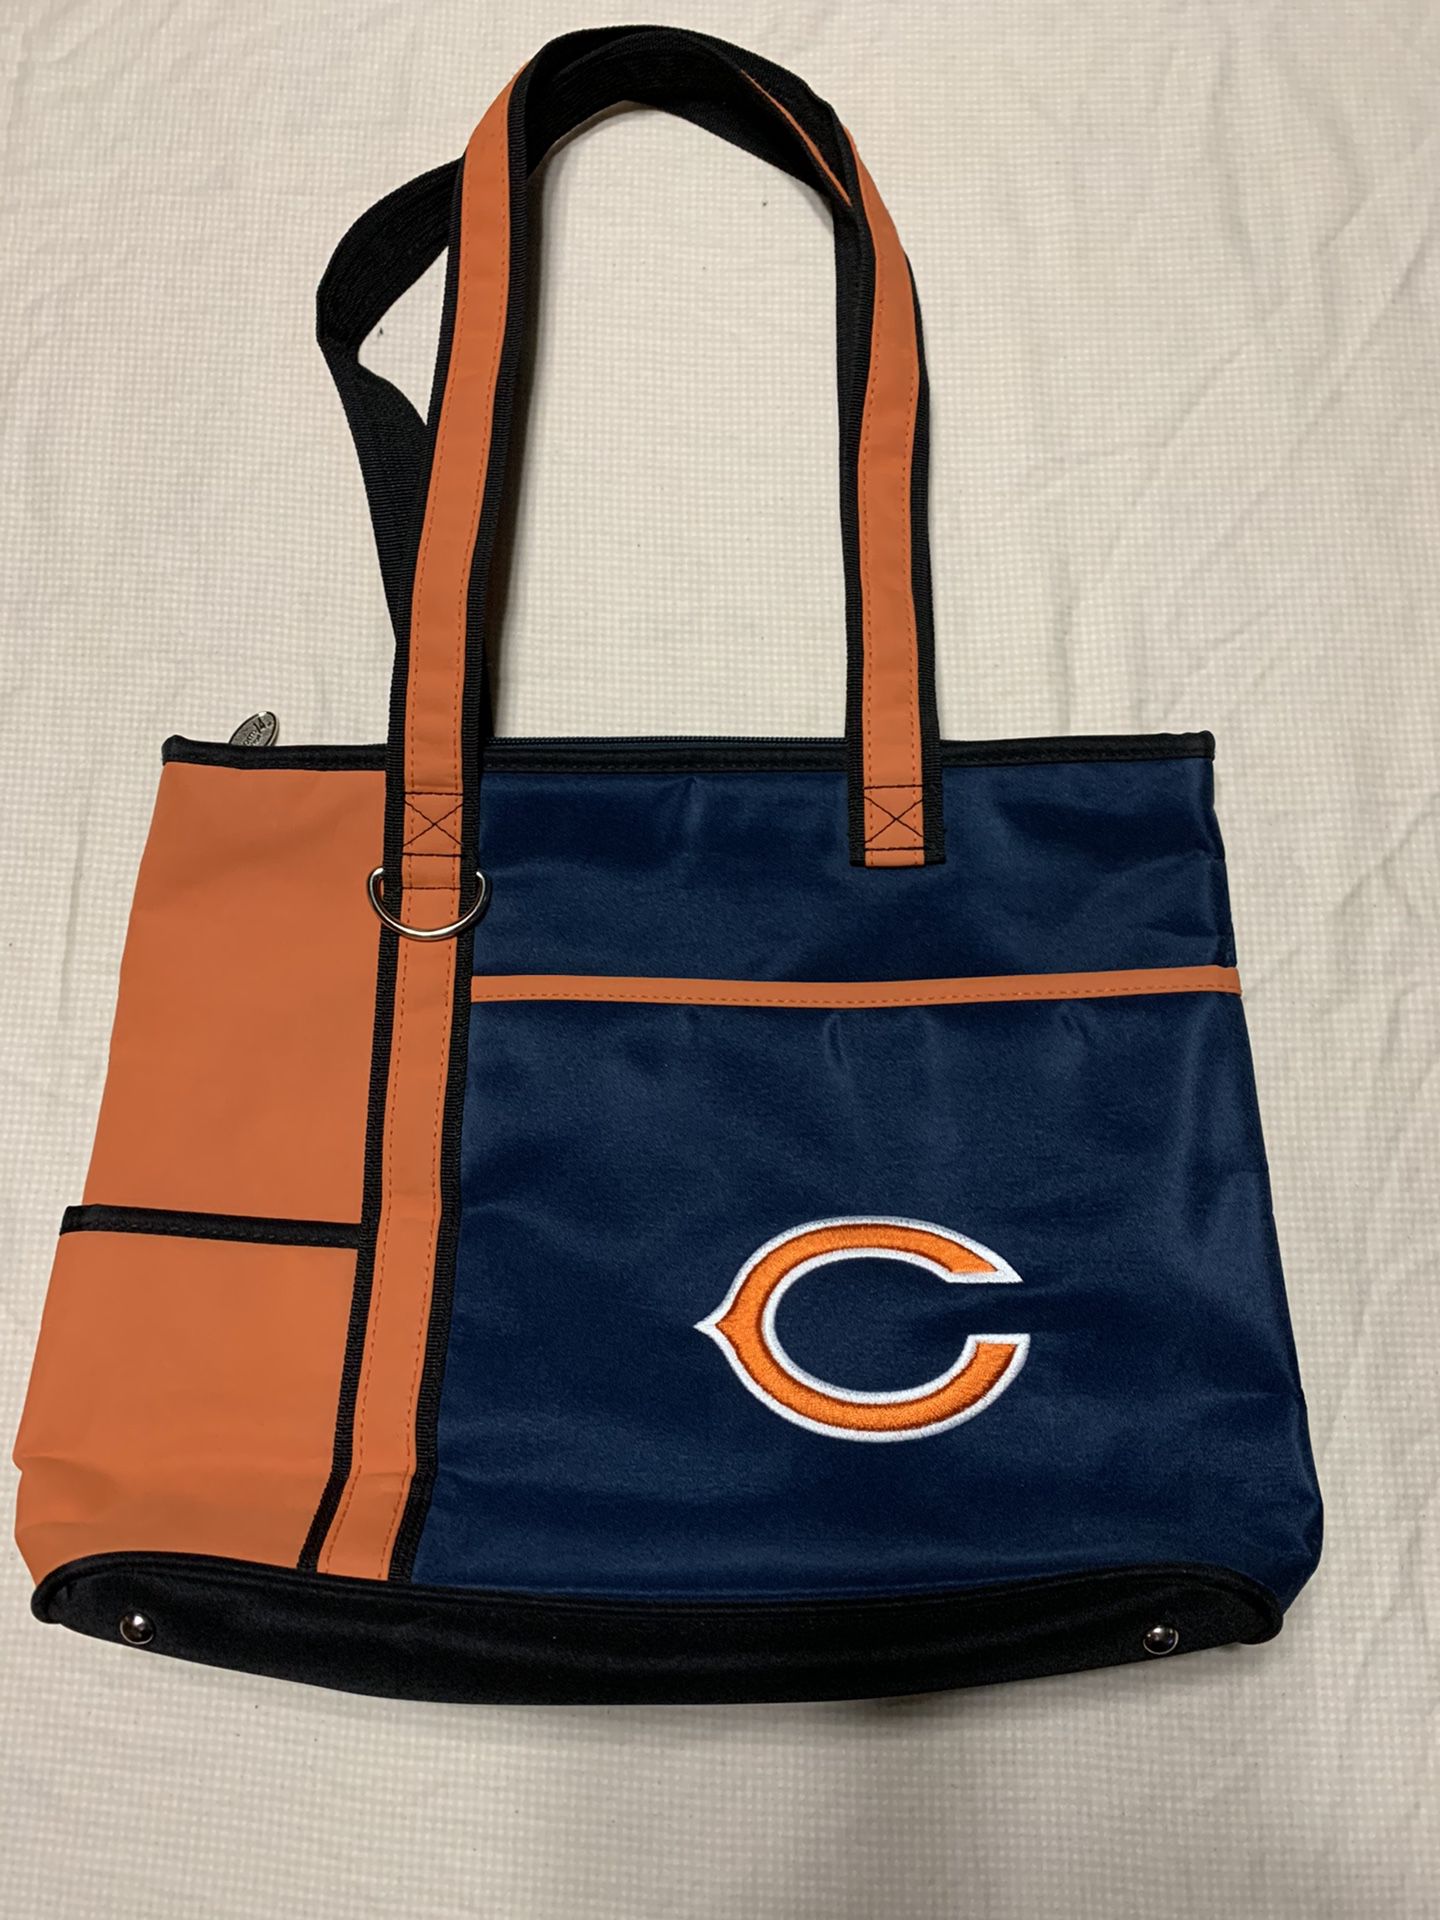 Chicago Bears purse